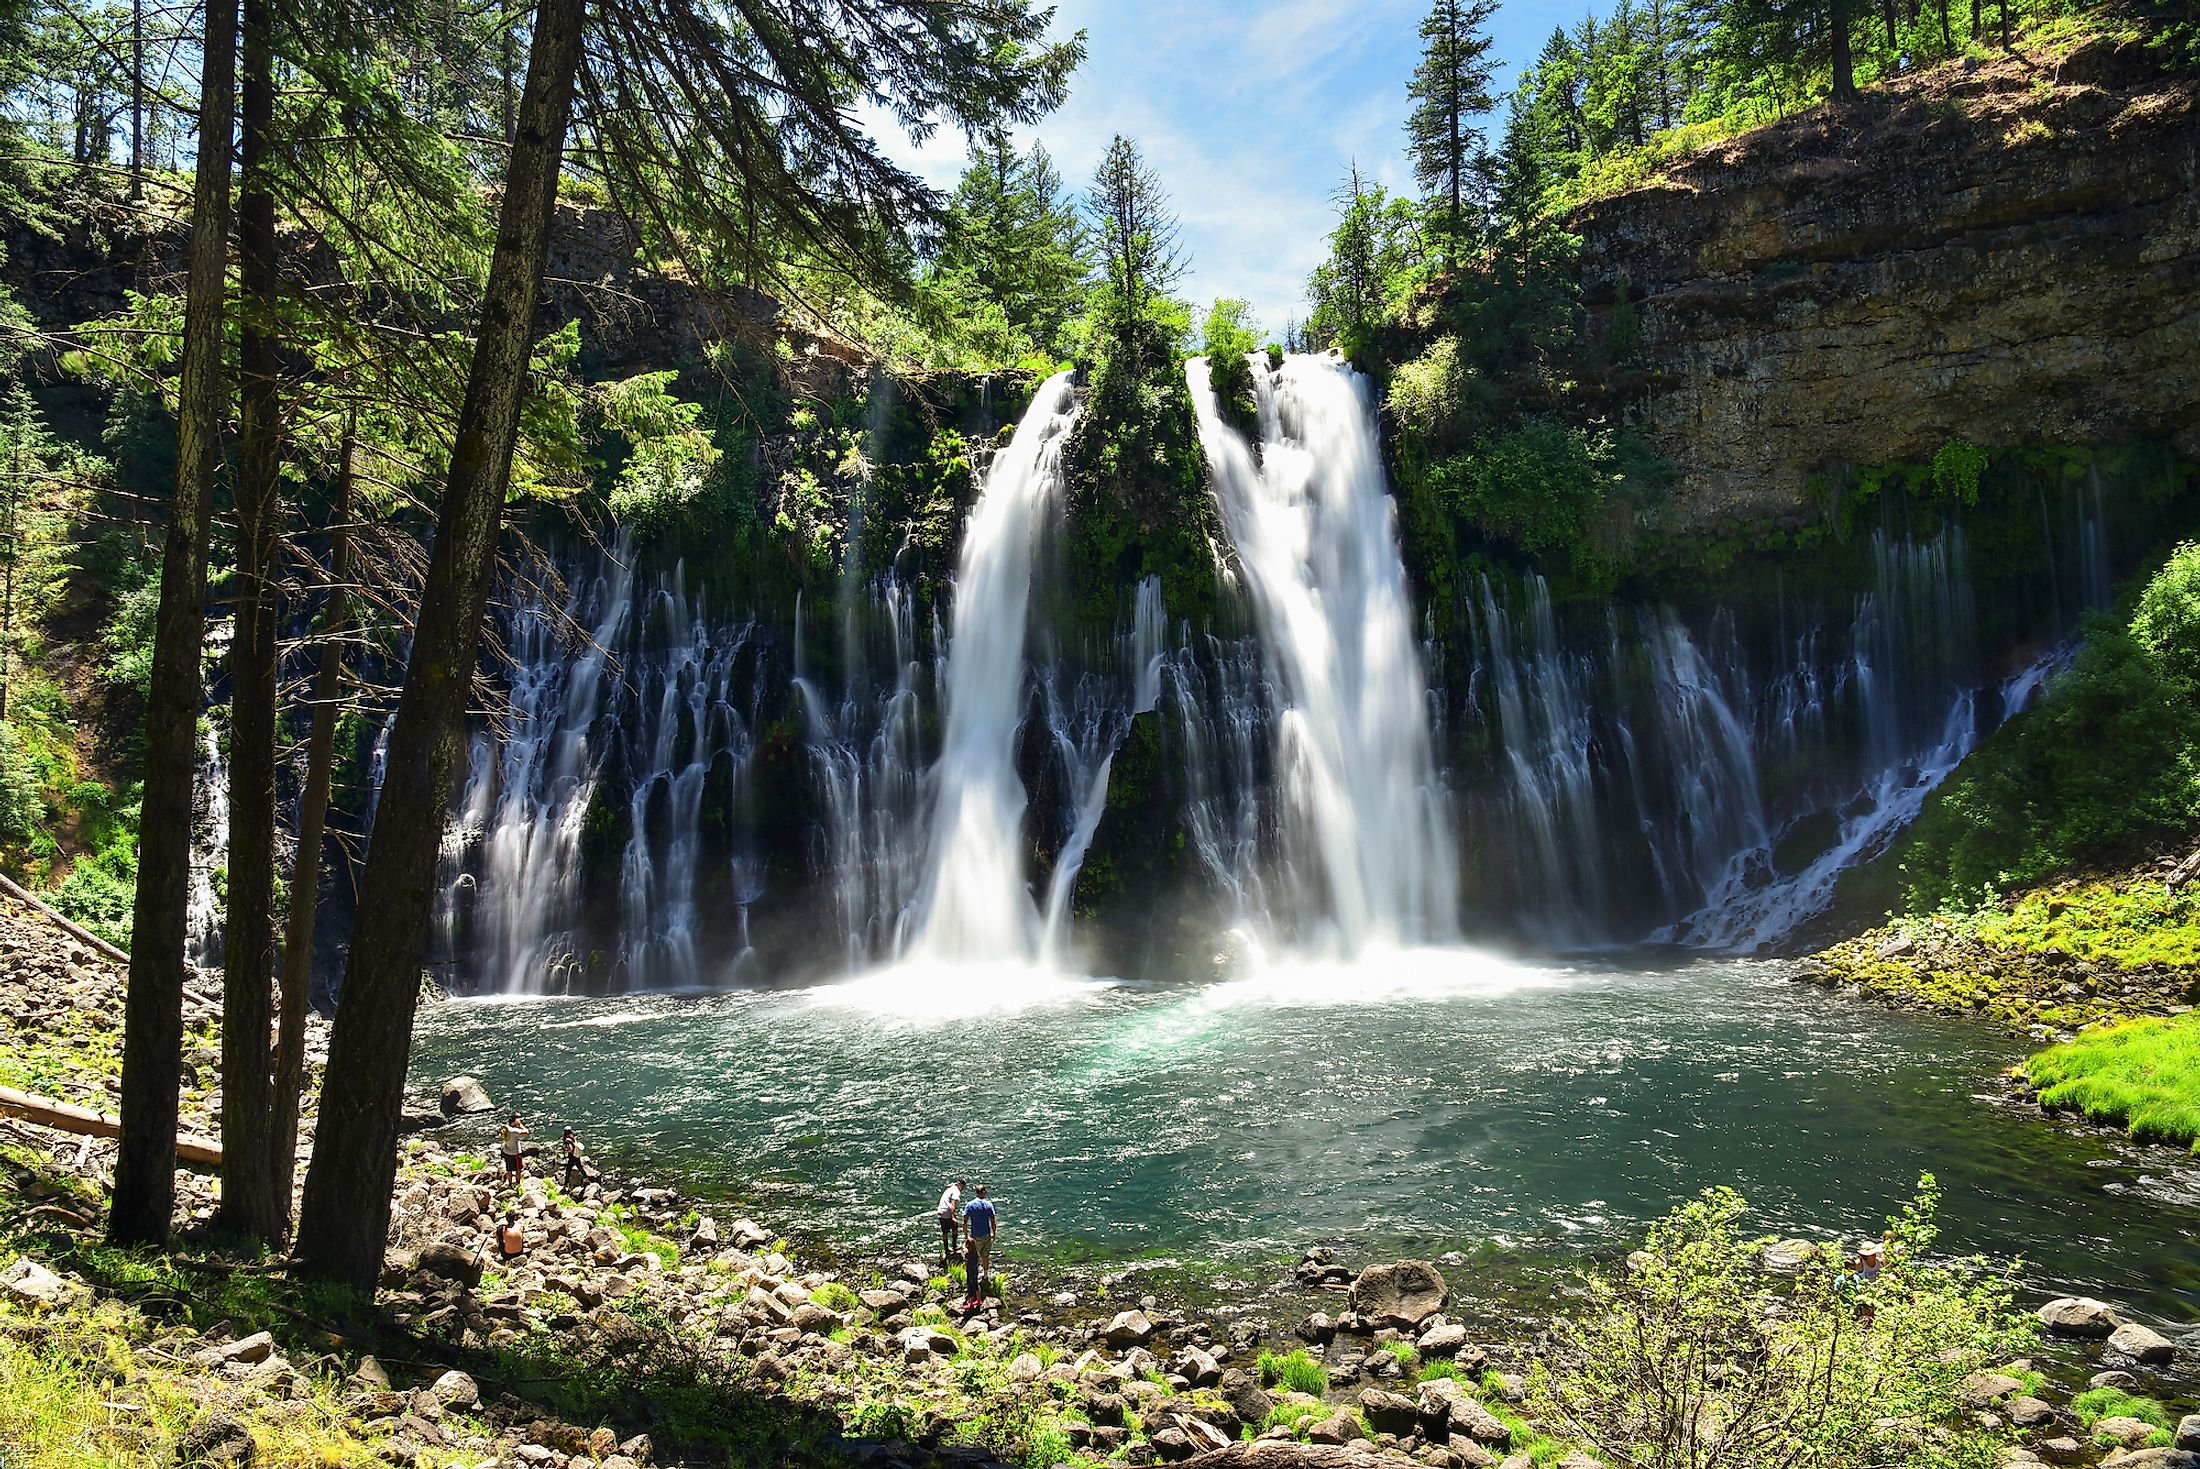 Burney Falls. Editorial credit: Sveta Imnadze / Shutterstock.com